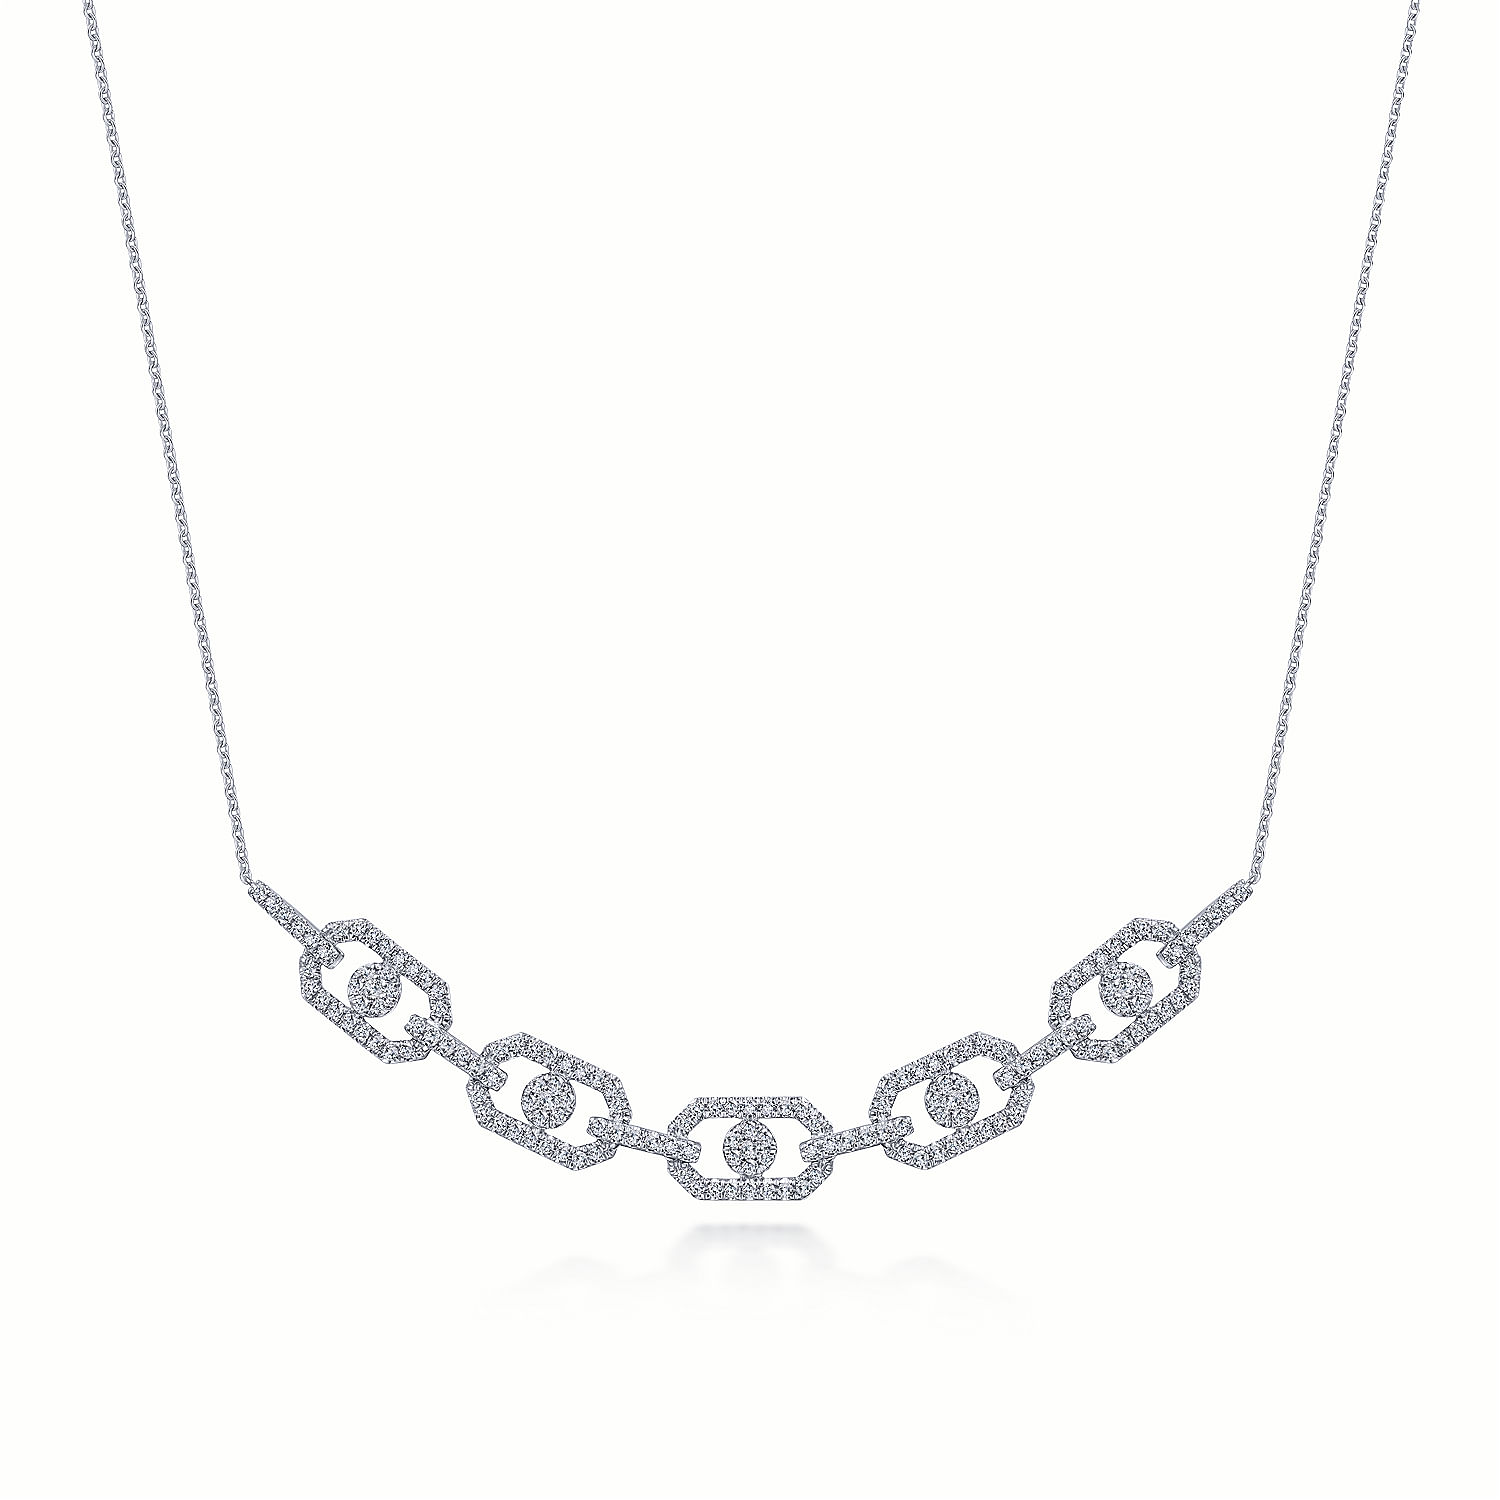 18 inch 14K White Gold Fashion Necklace